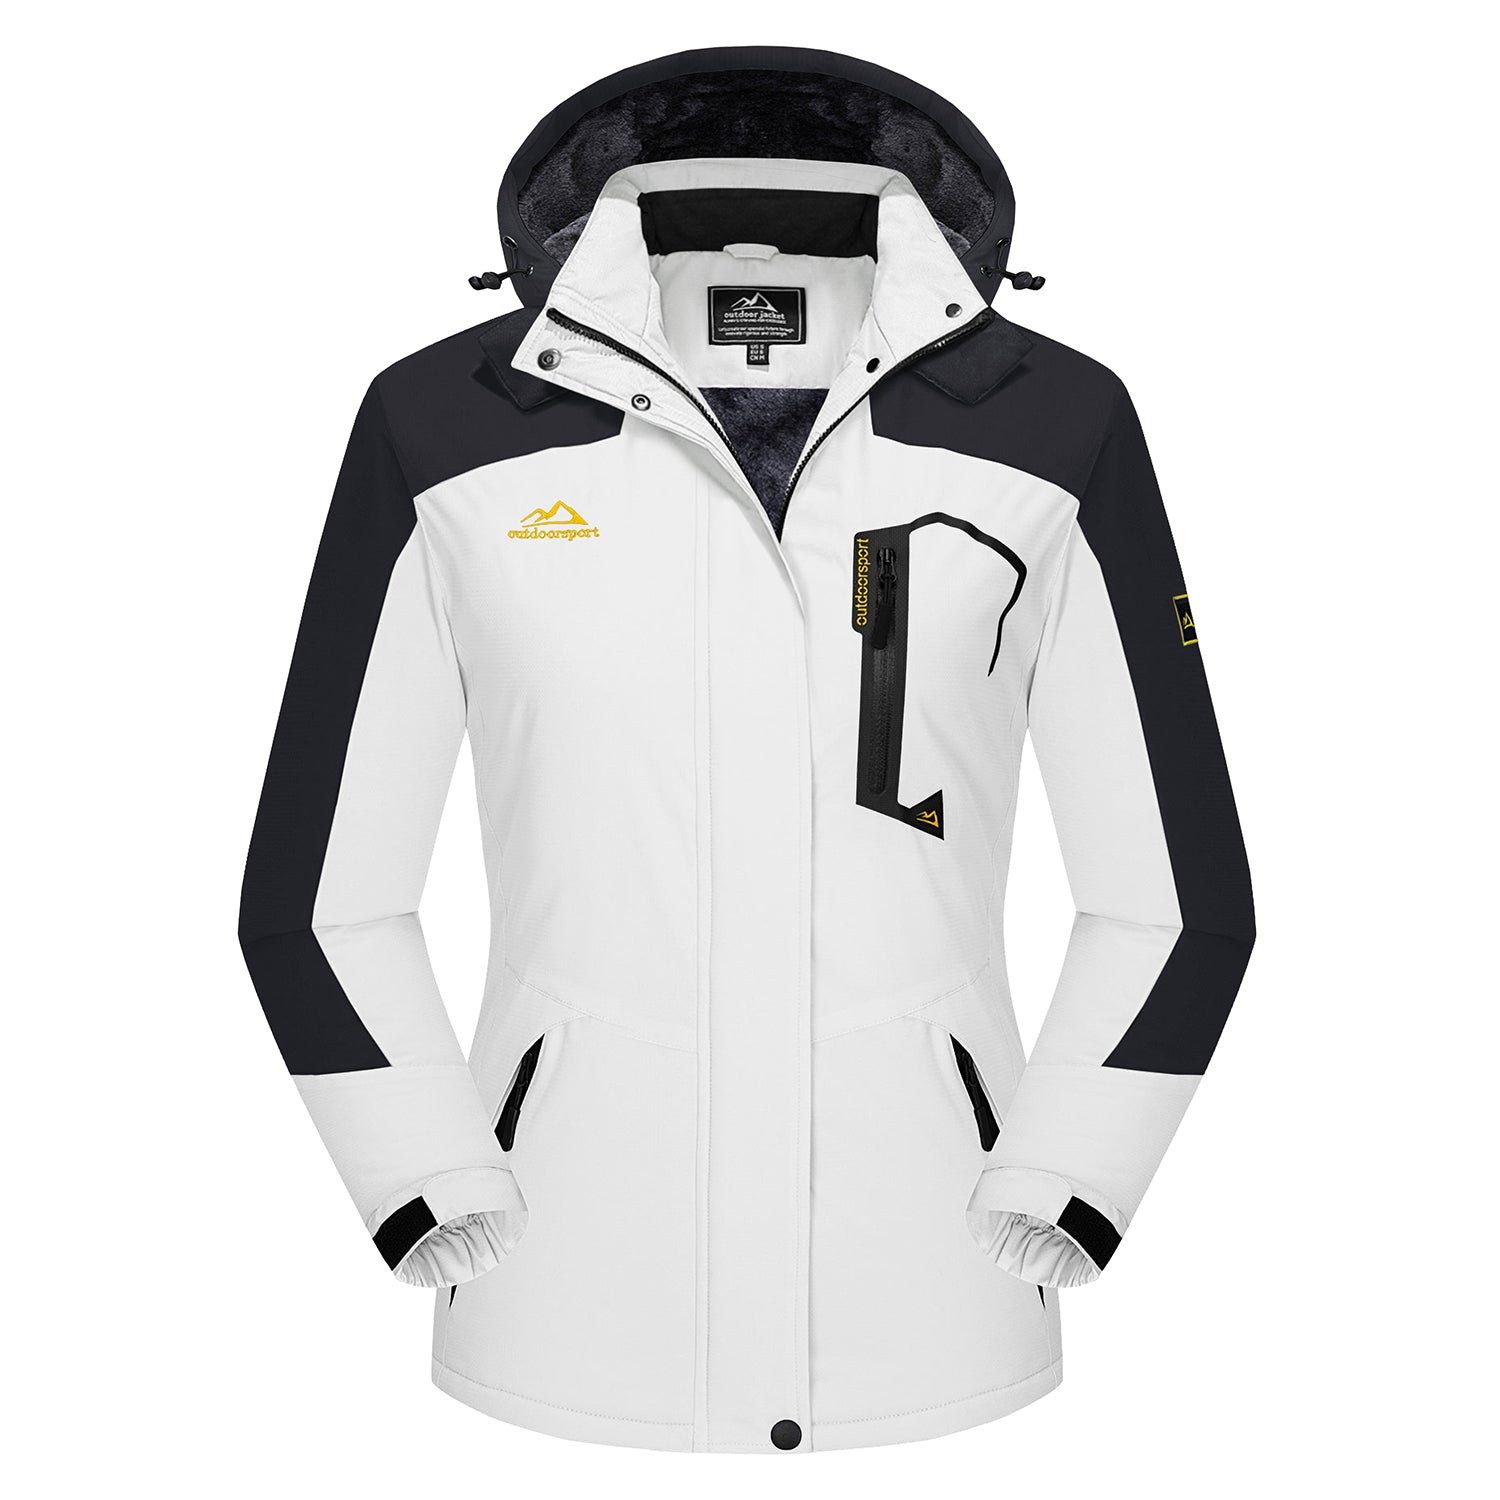 Women's Winter Coats Water Resistant Ski Snow Jacket Warm Fleece Parka Raincoats with 4 Pockets